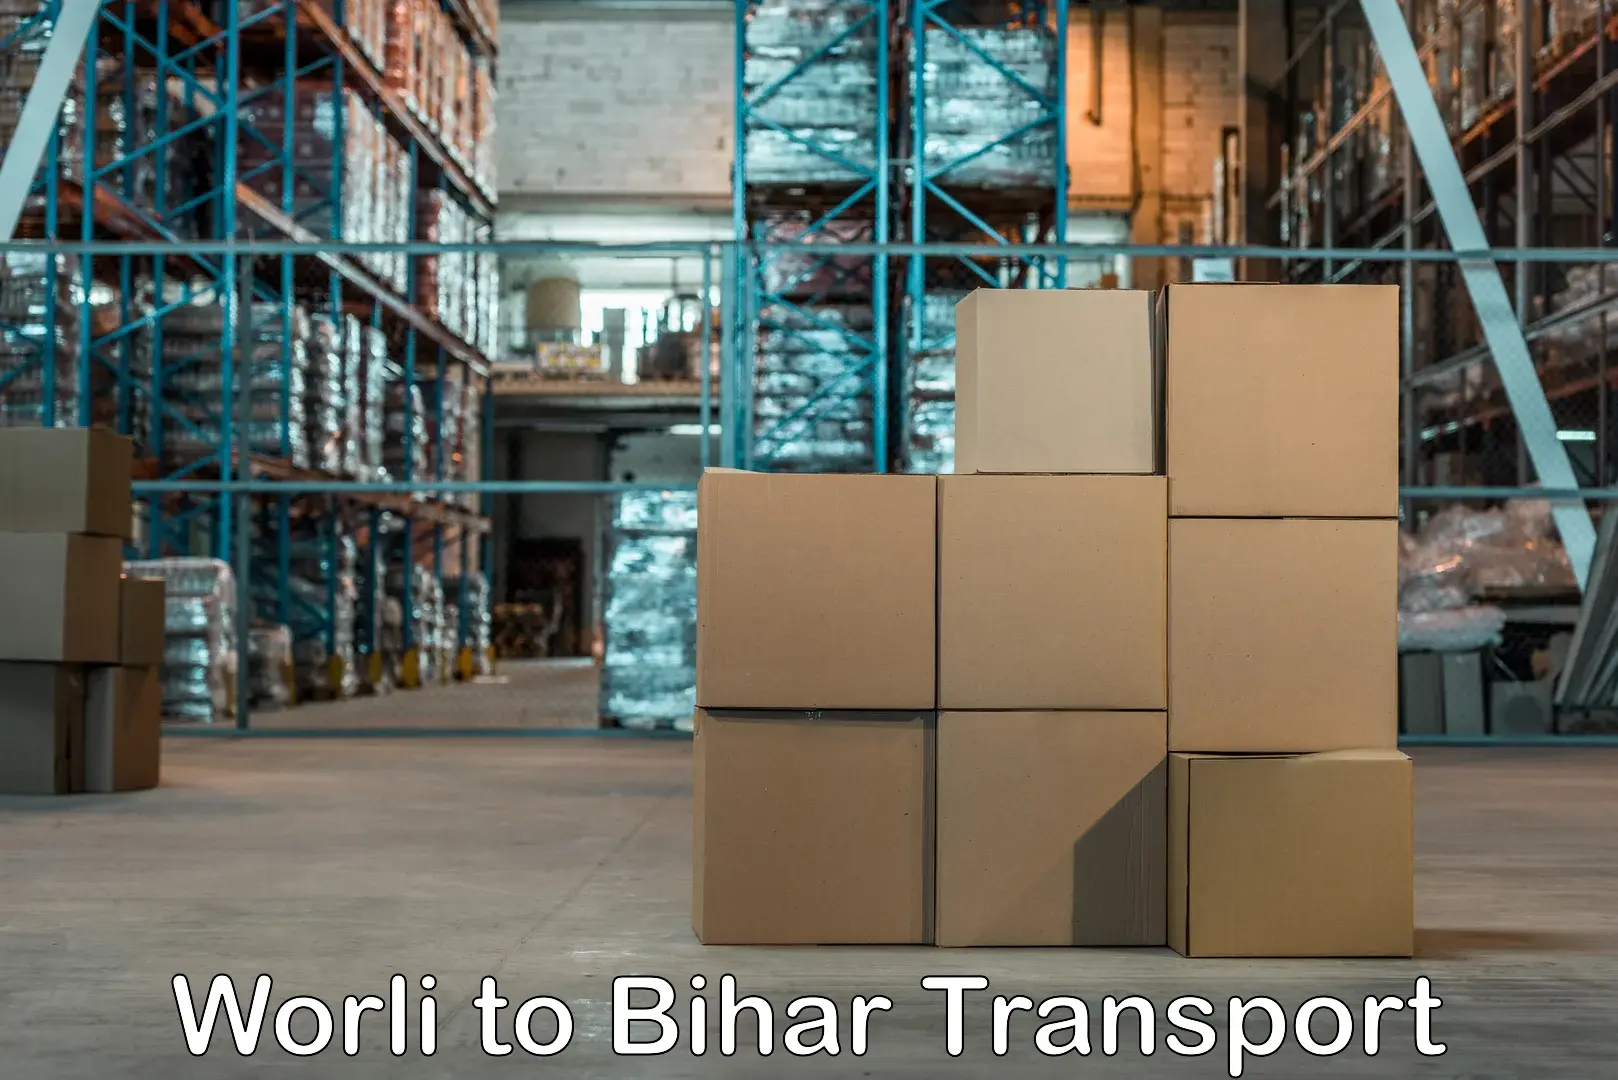 Delivery service Worli to Bihar